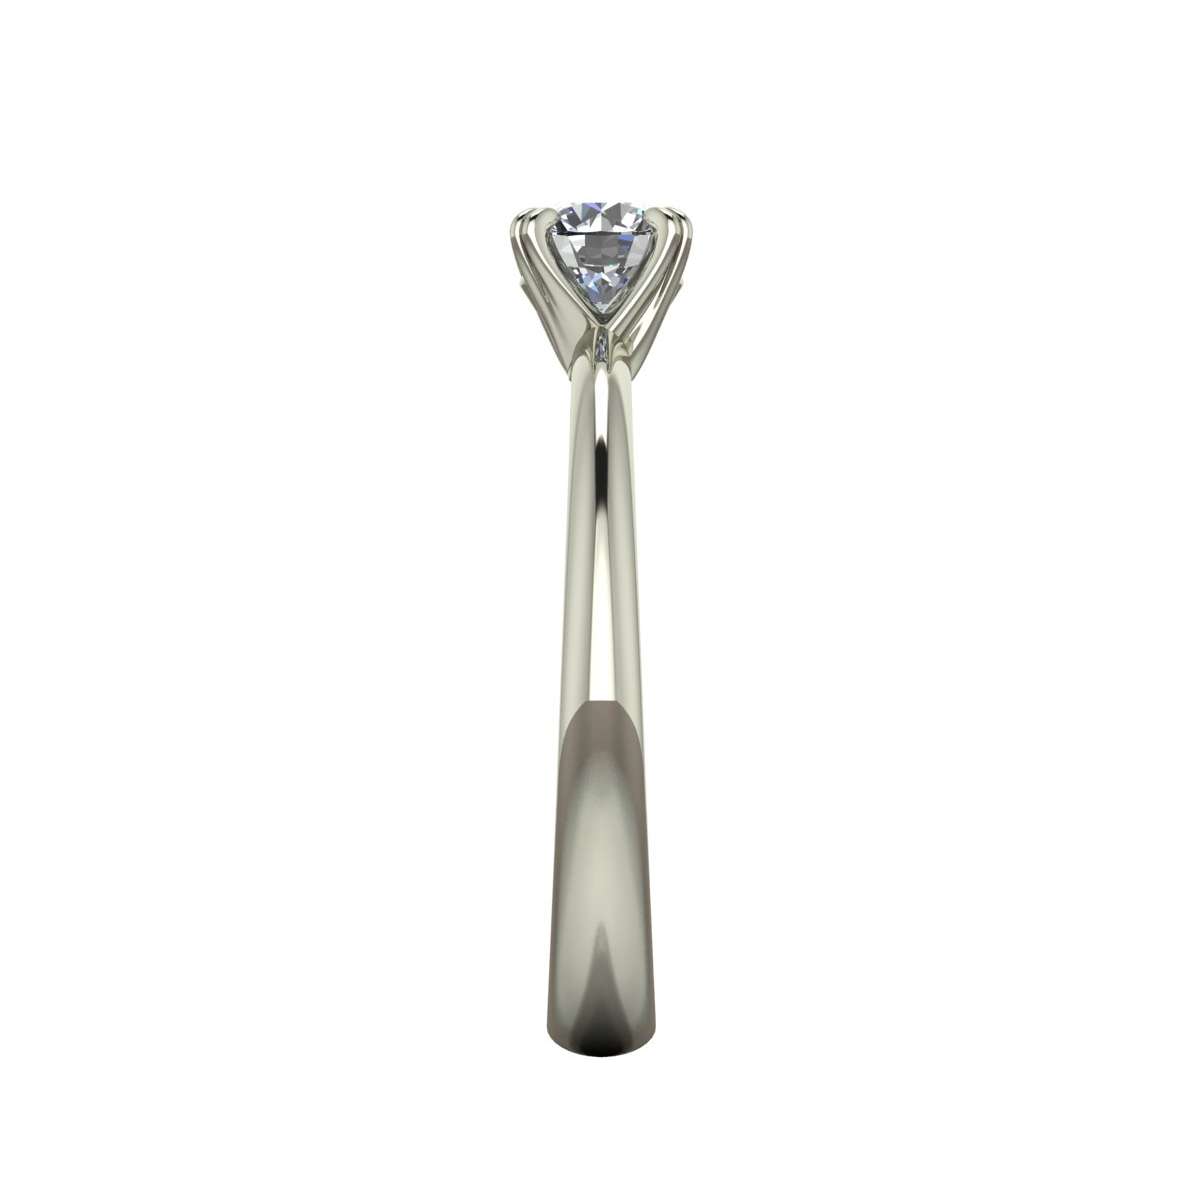 Solitaire ring femininity white gold diamond certificate GIA carat 0.40 G-IF